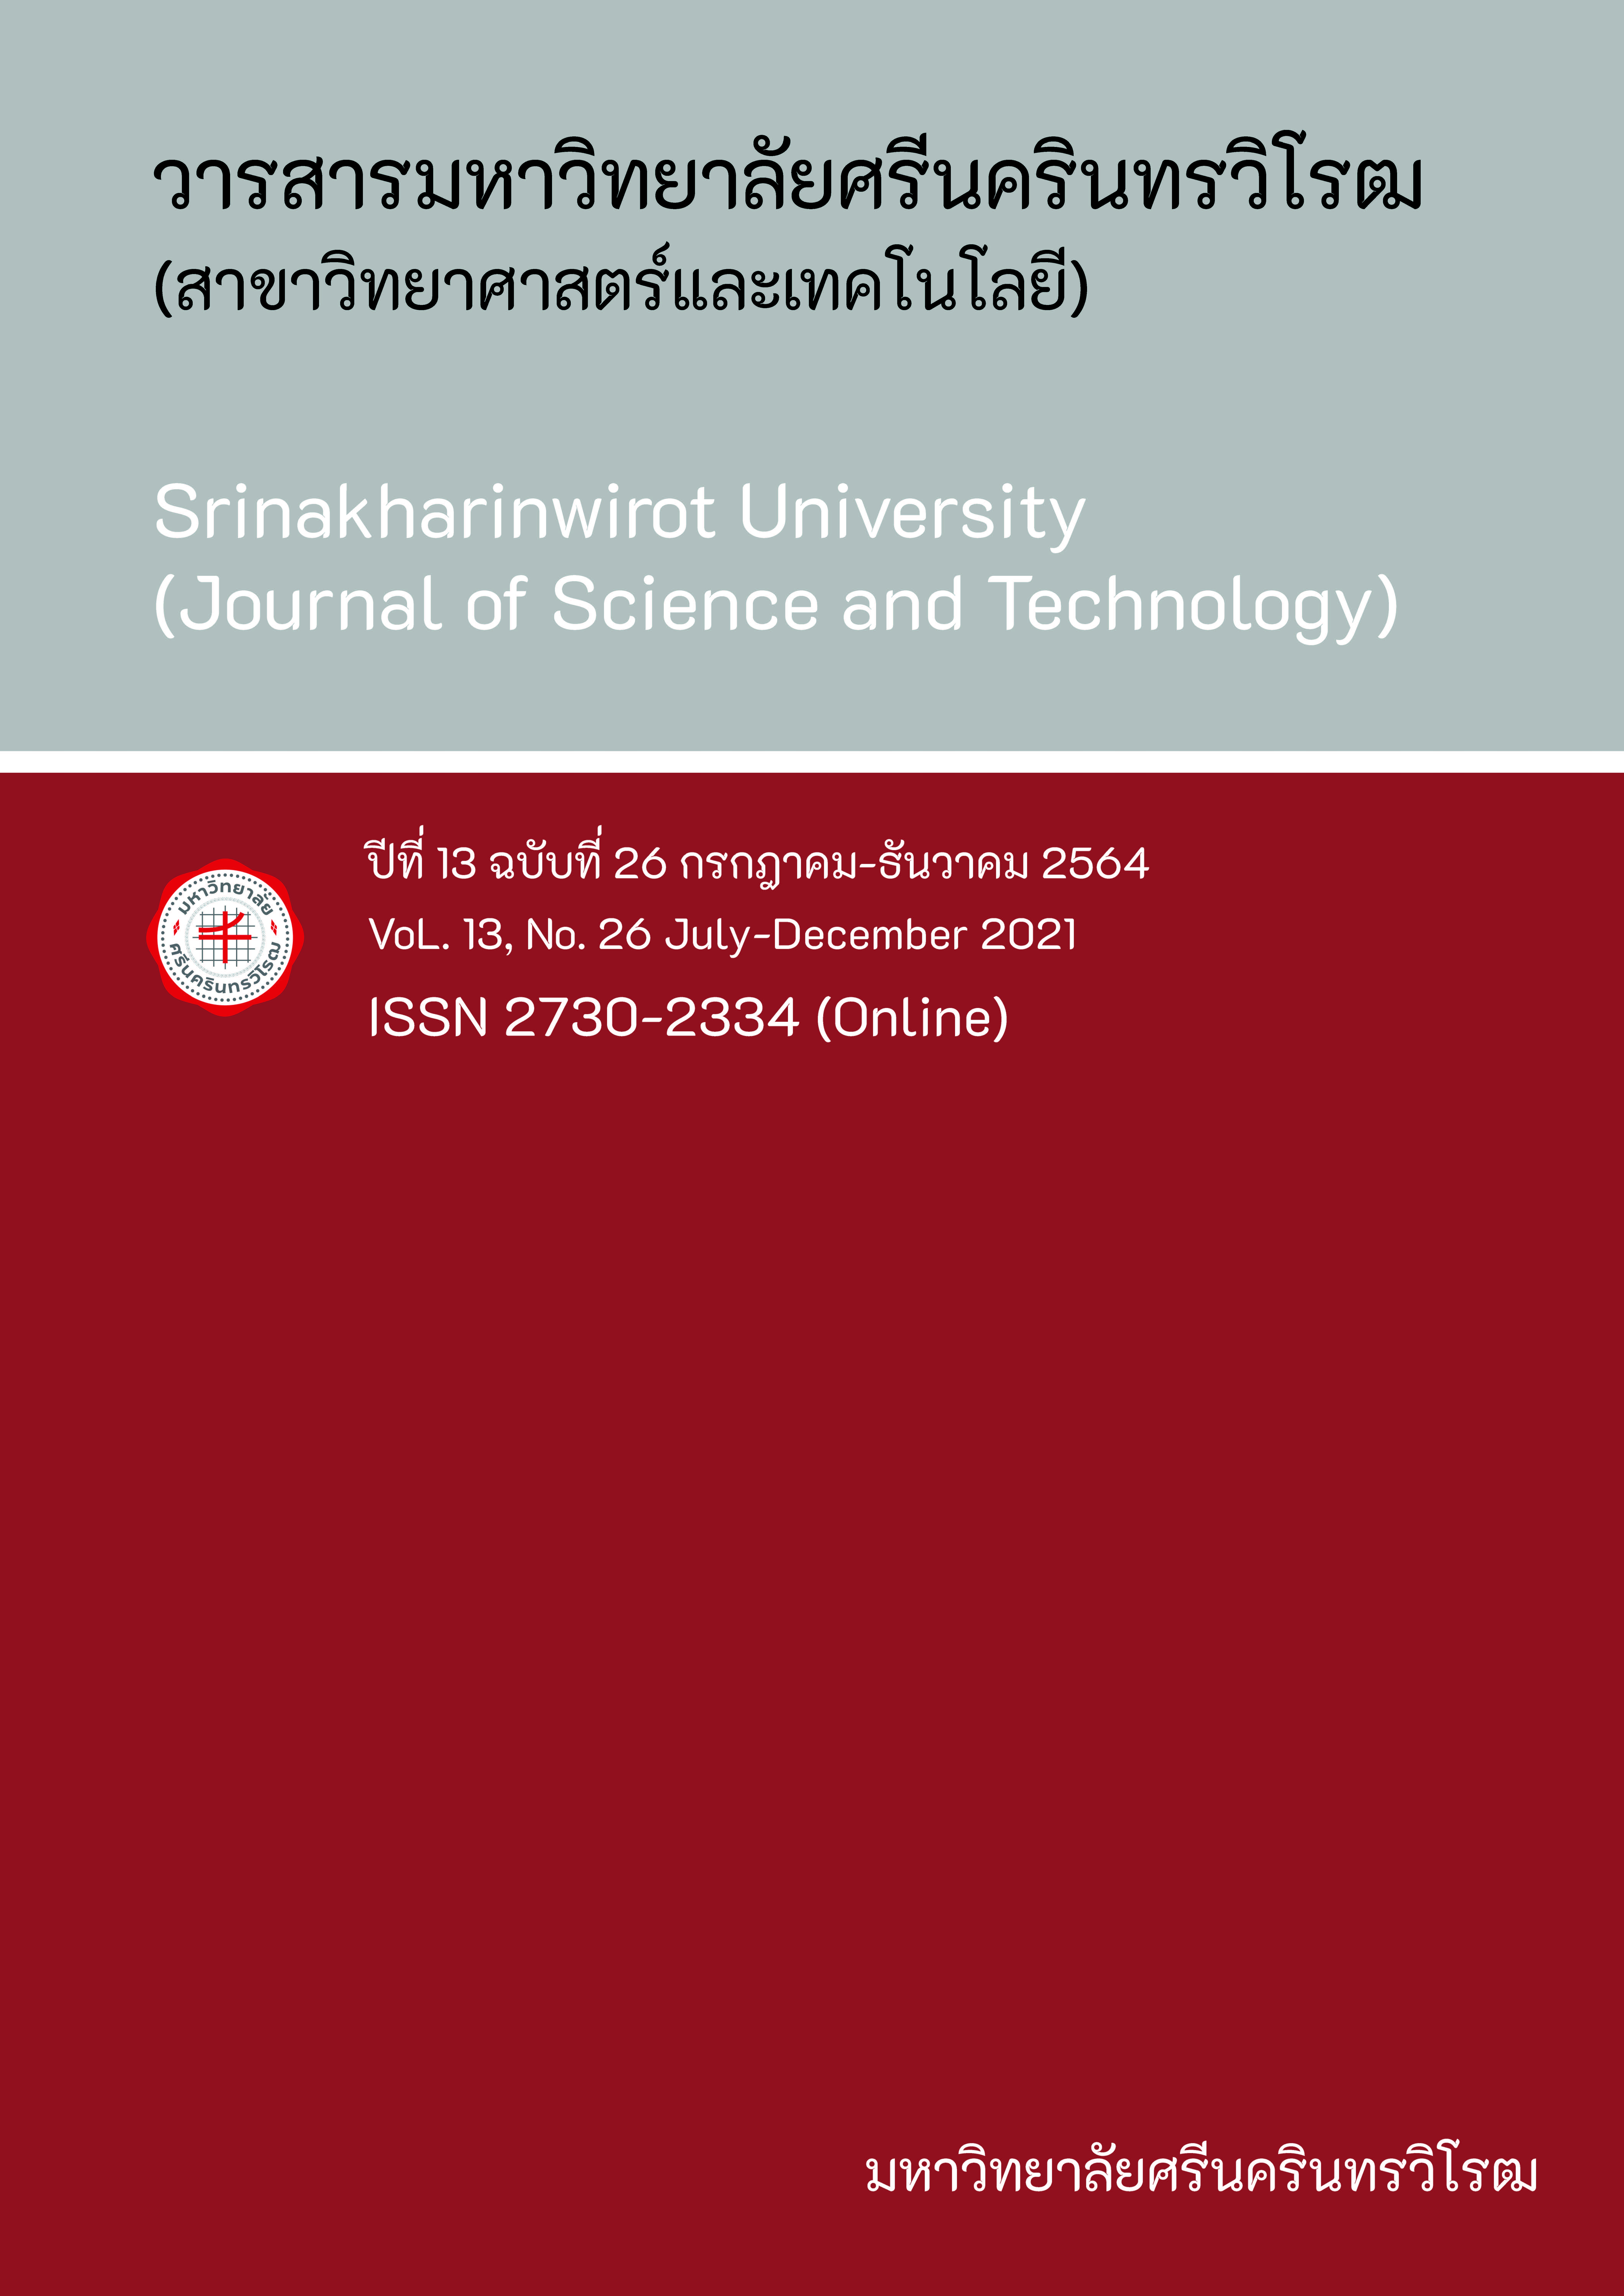 					View Vol. 13 No. 26 (2021): Srinakharinwirot University (Journal of Science and Technology)
				